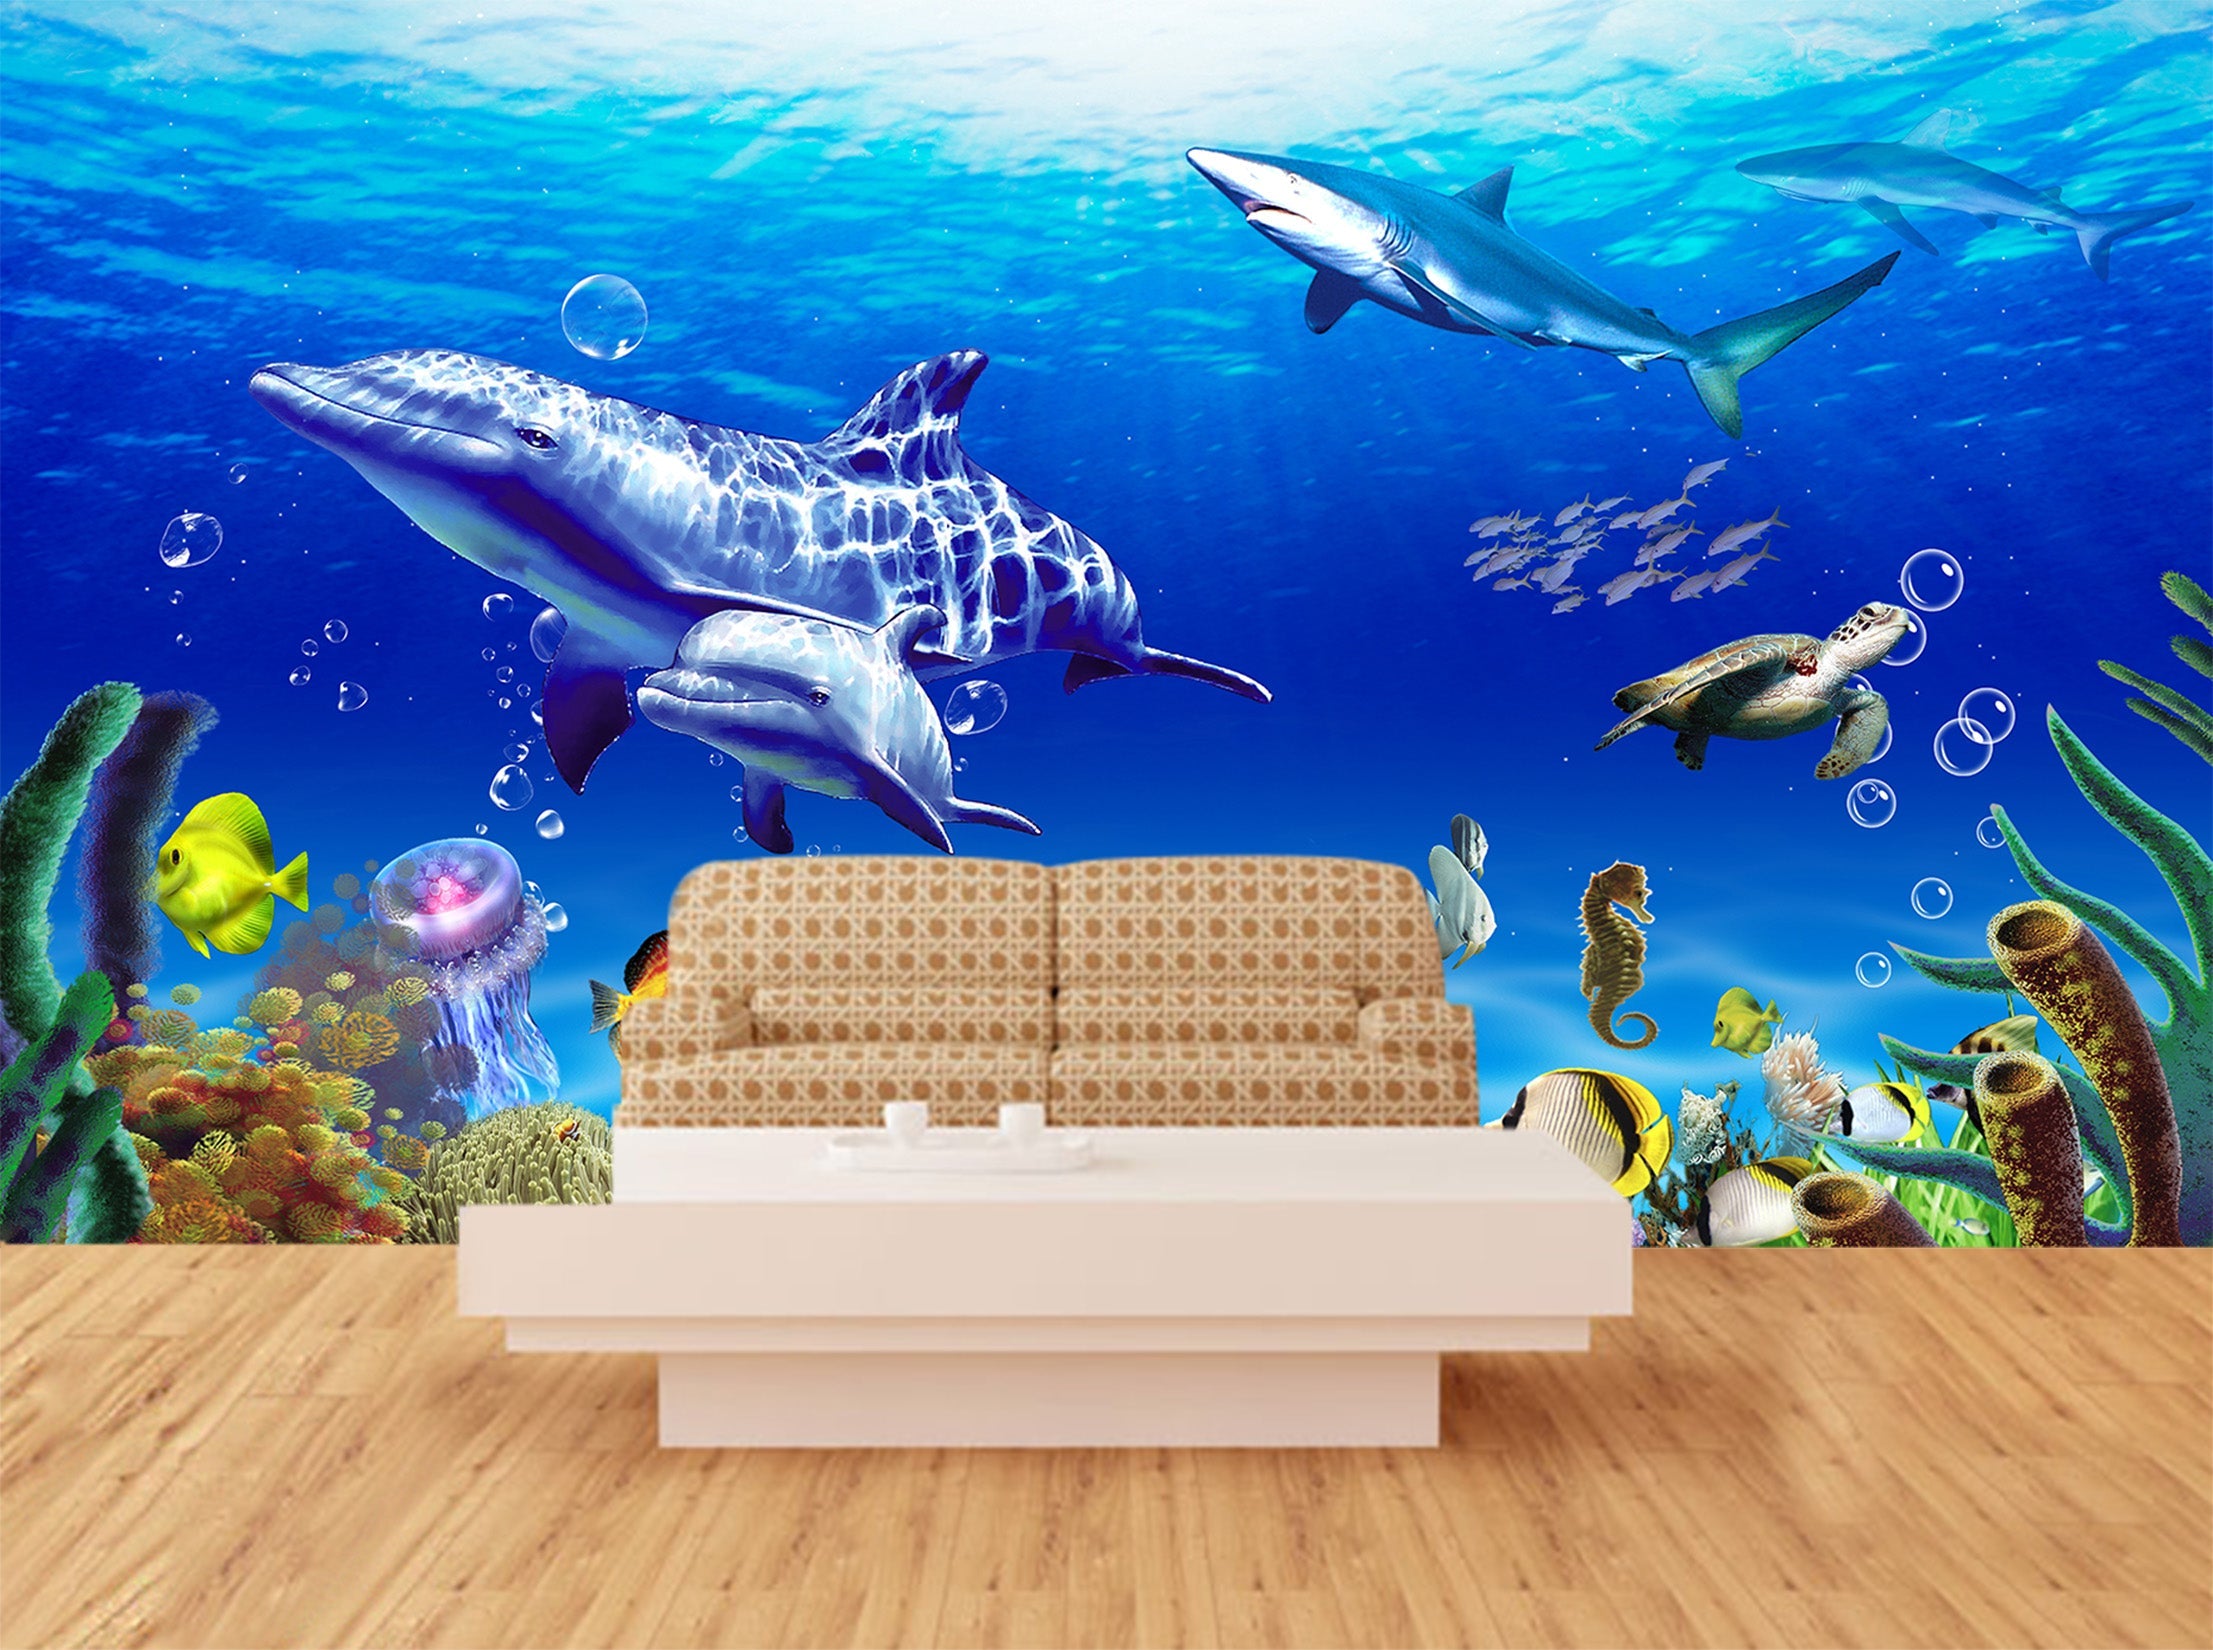 3D Underwater World 035 Wall Murals Wallpaper AJ Wallpaper 2 